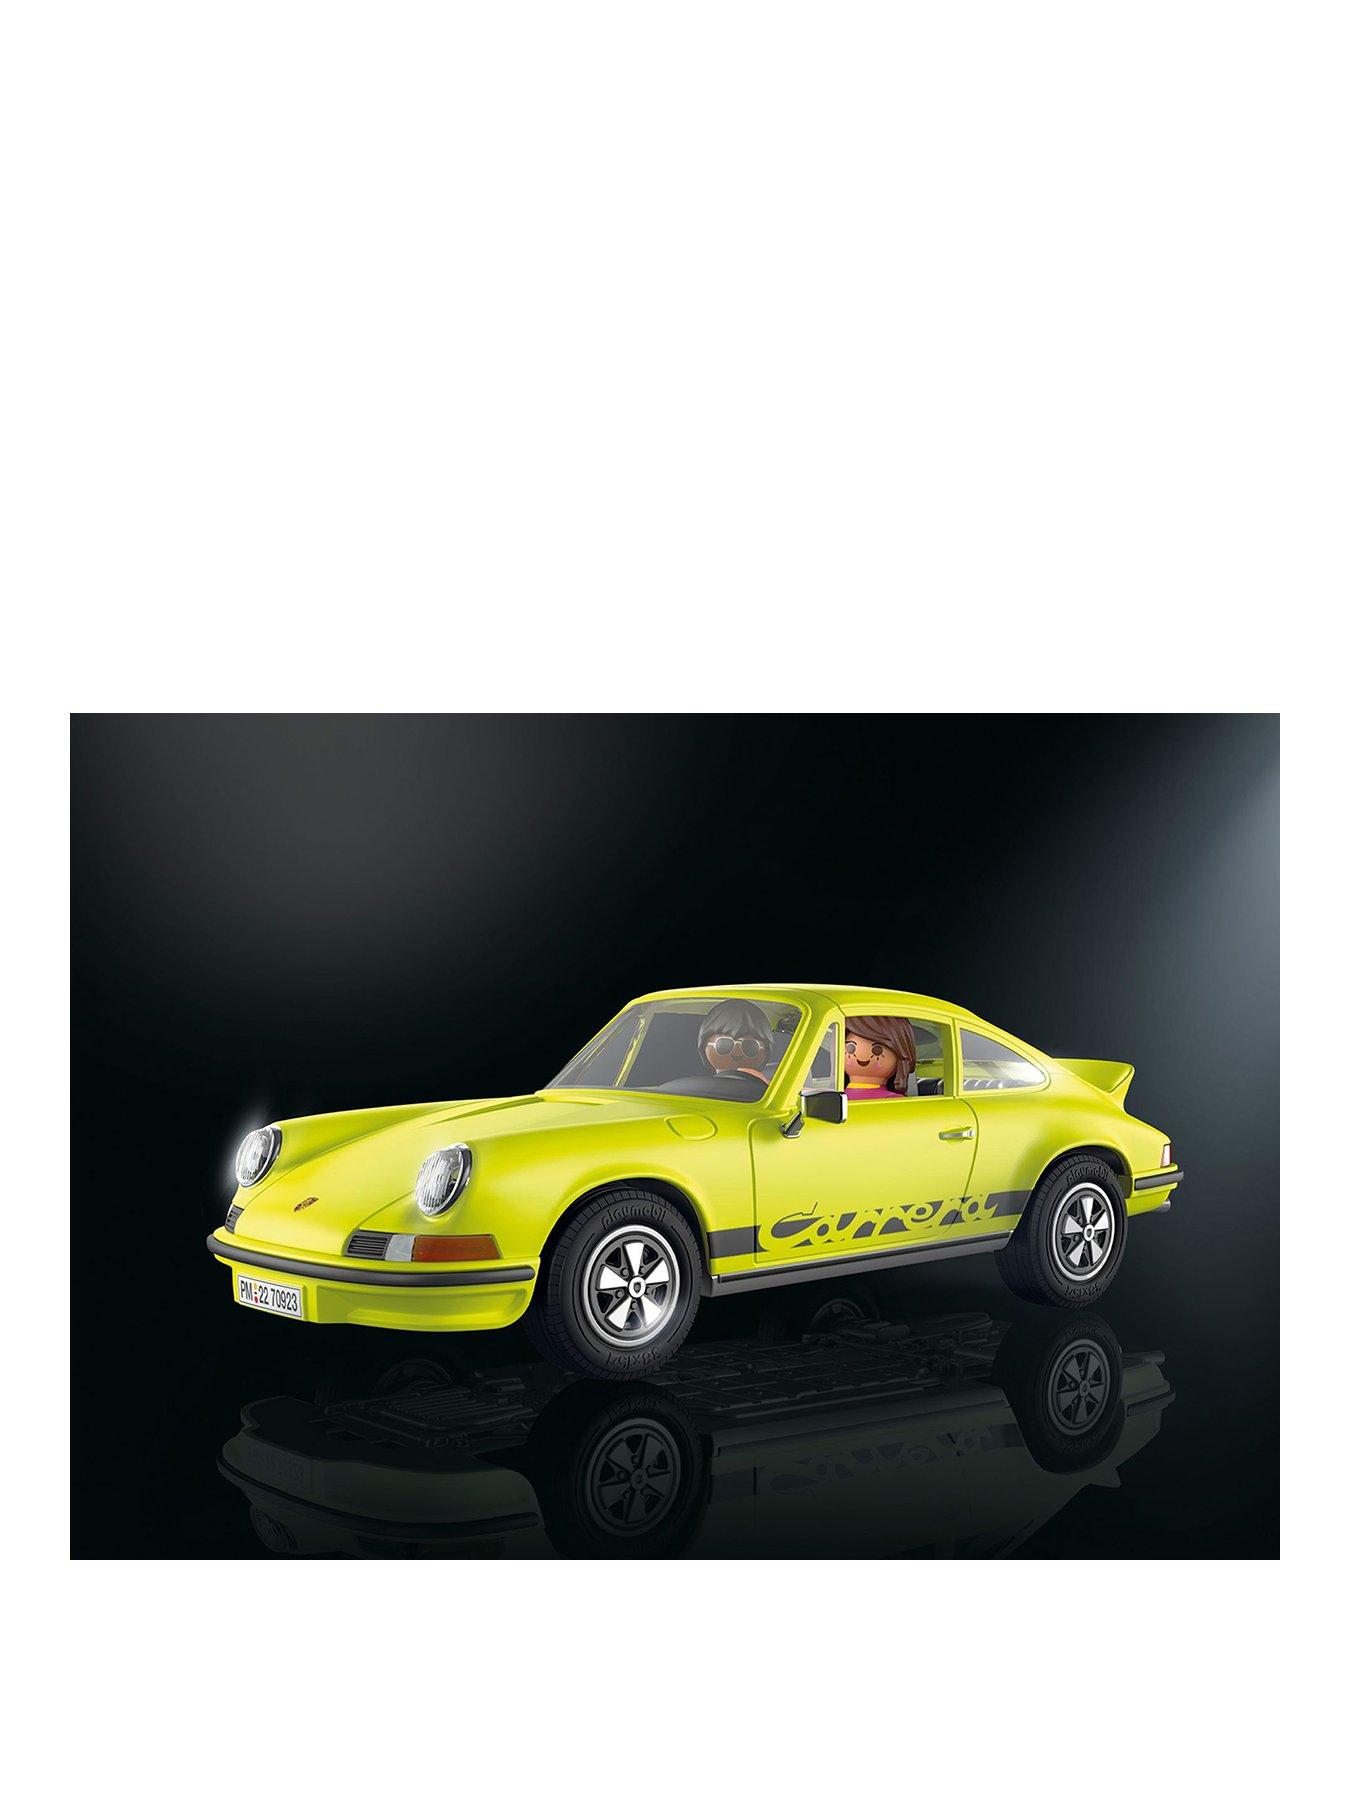 Playmobil Porsche 911 Carrera RS 2.7 PLY 70923 PLY70923 PLY.70923 | Pelican  Parts